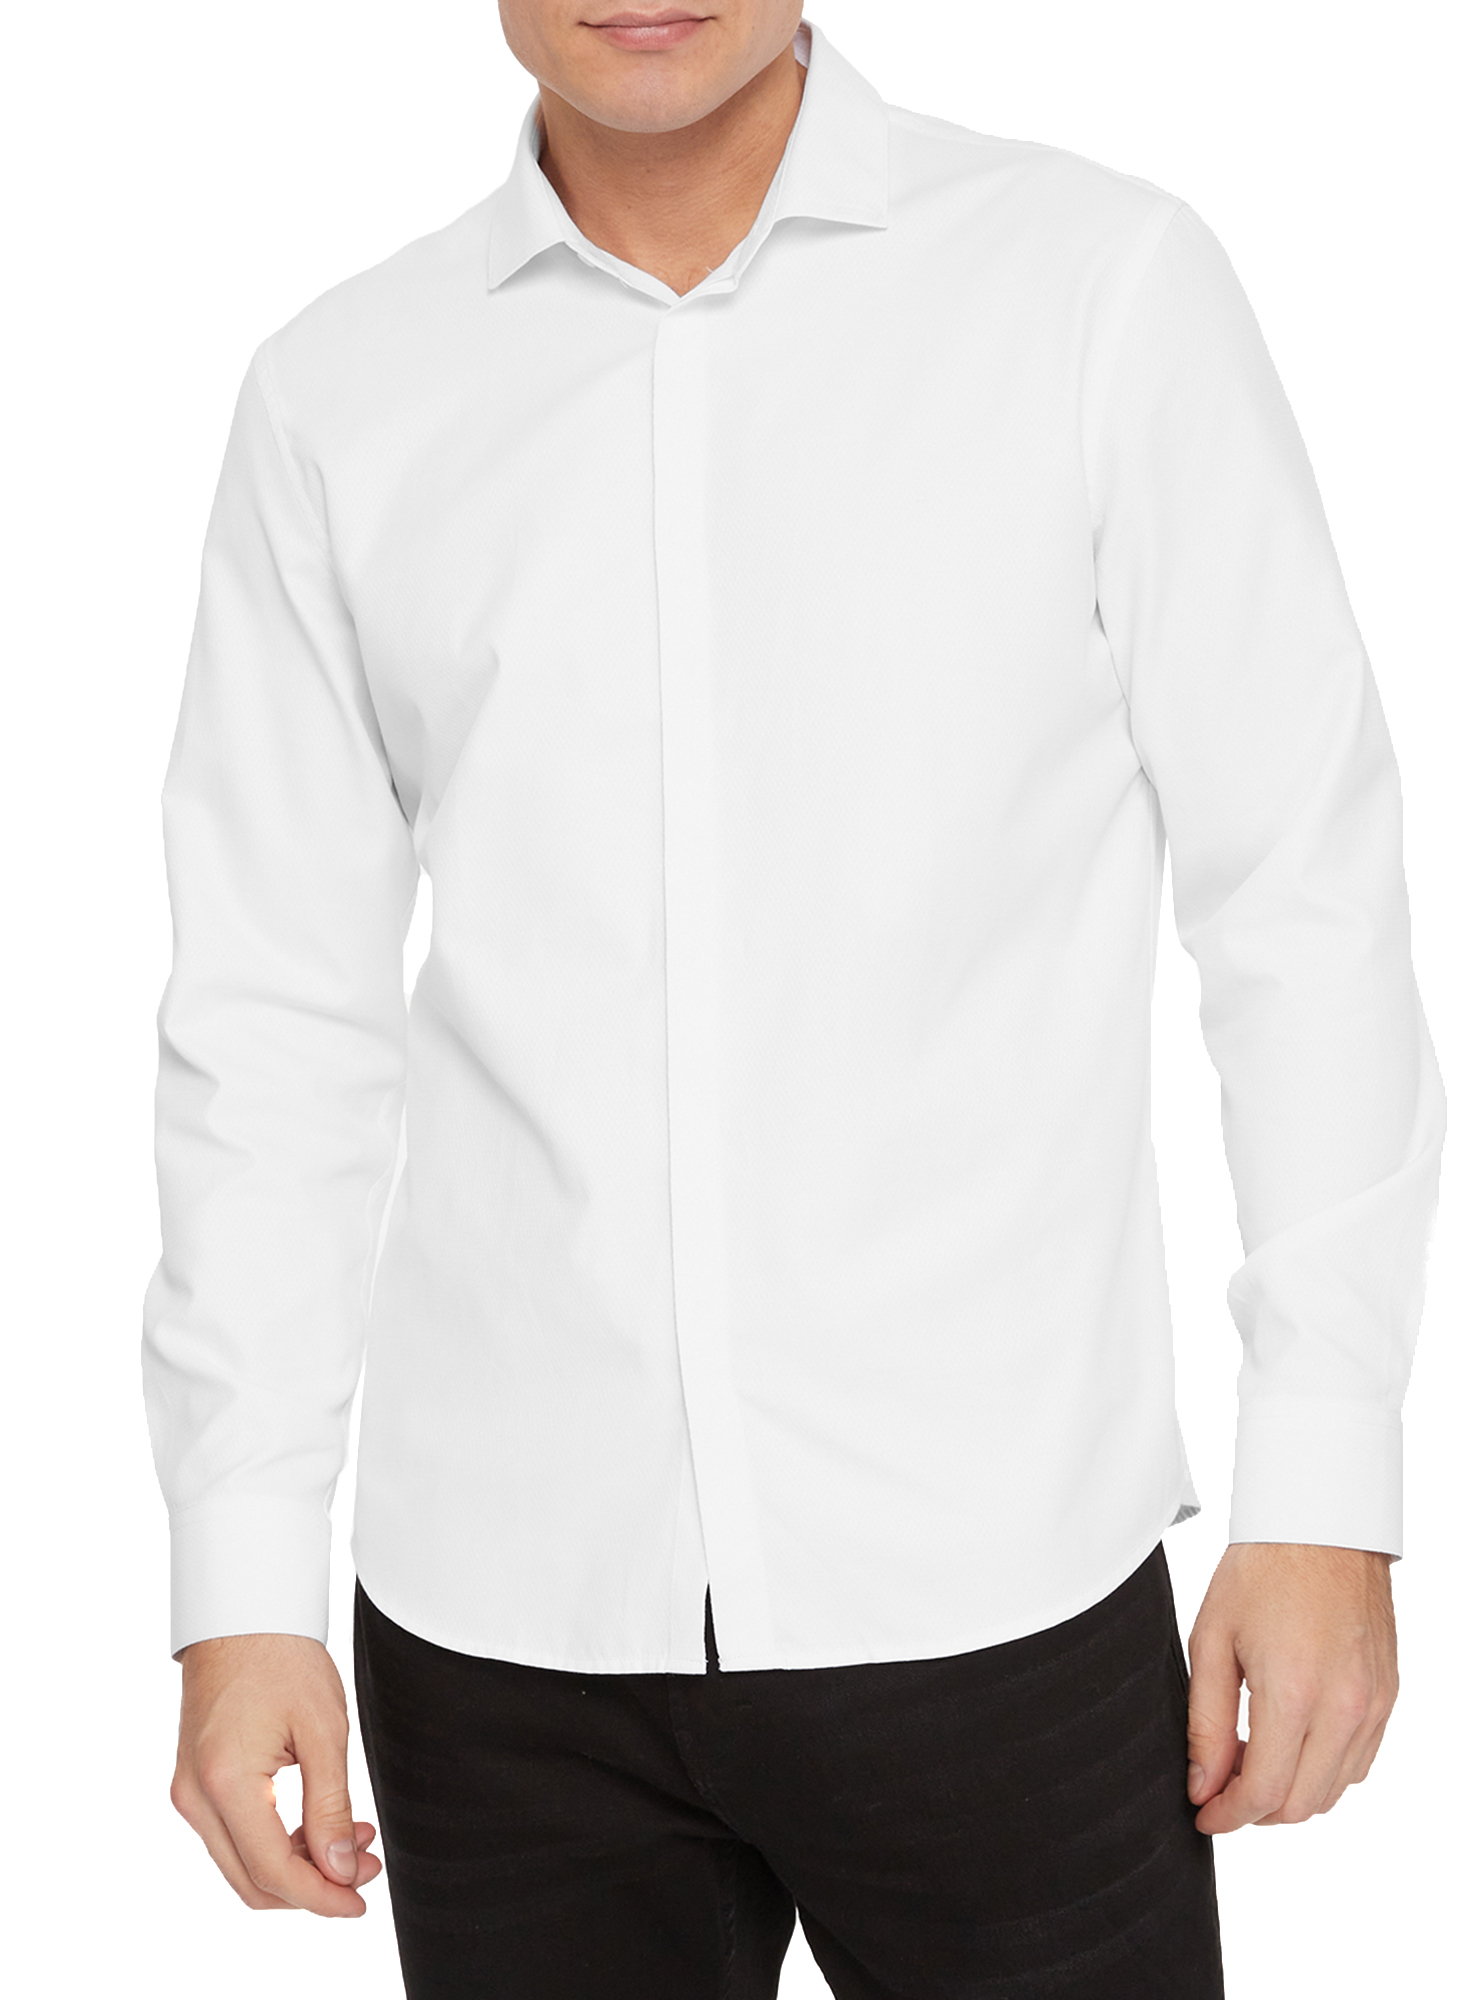 Рубашка мужская oodji 3B110017M-6 белая S